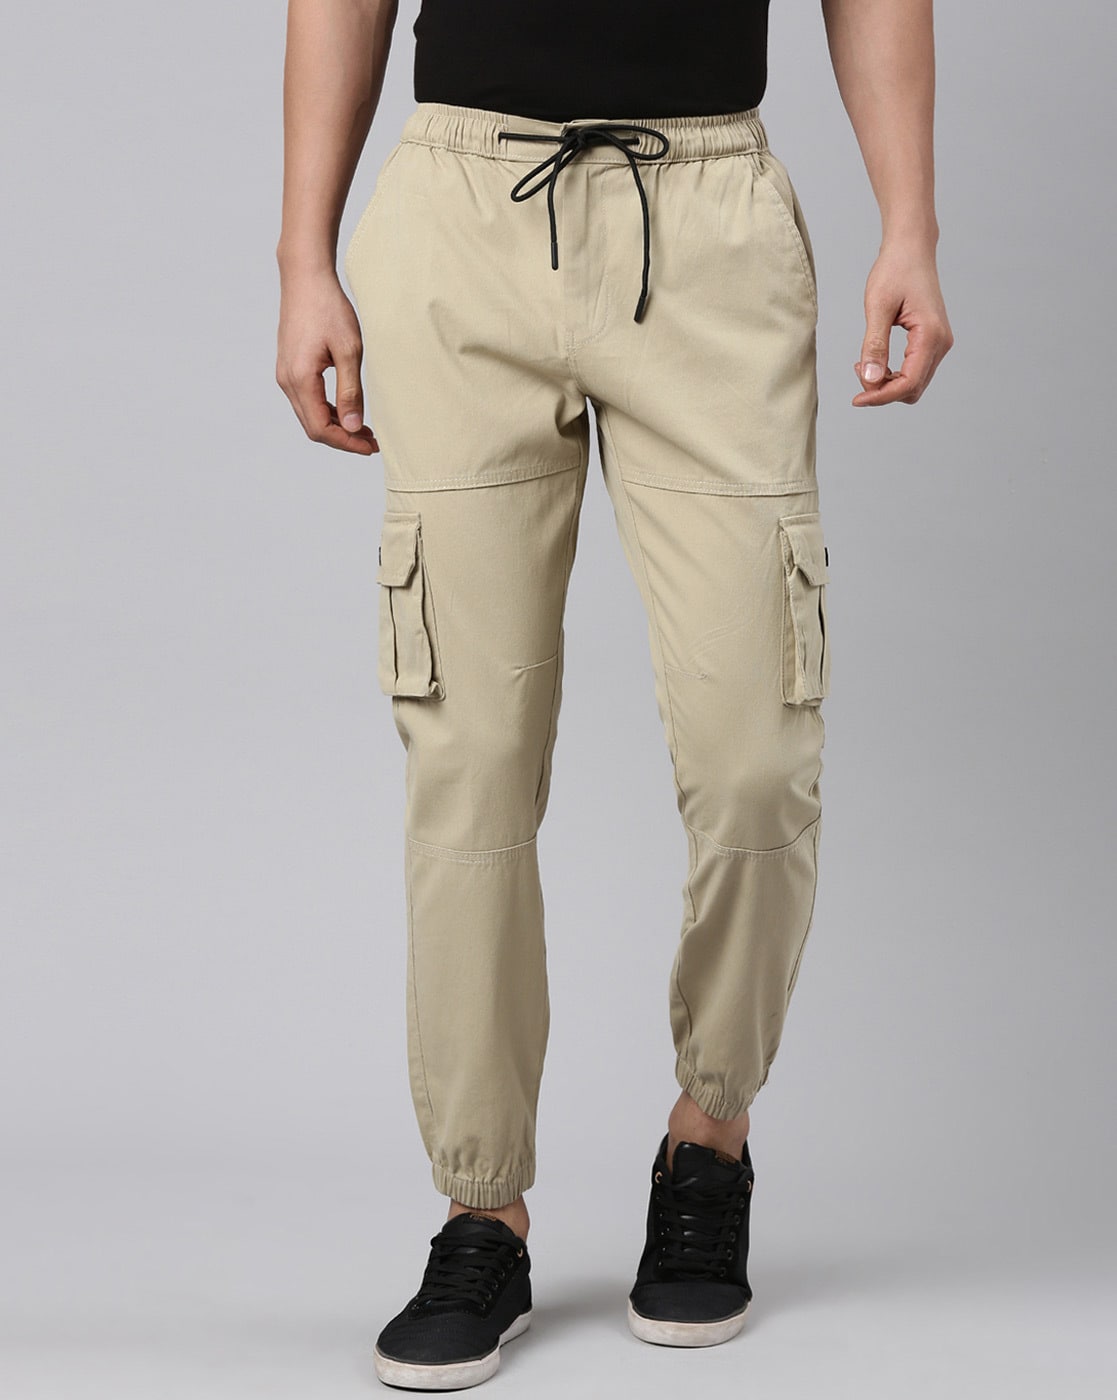 Canvas cargo trousers - Dark khaki green - Ladies | H&M IN